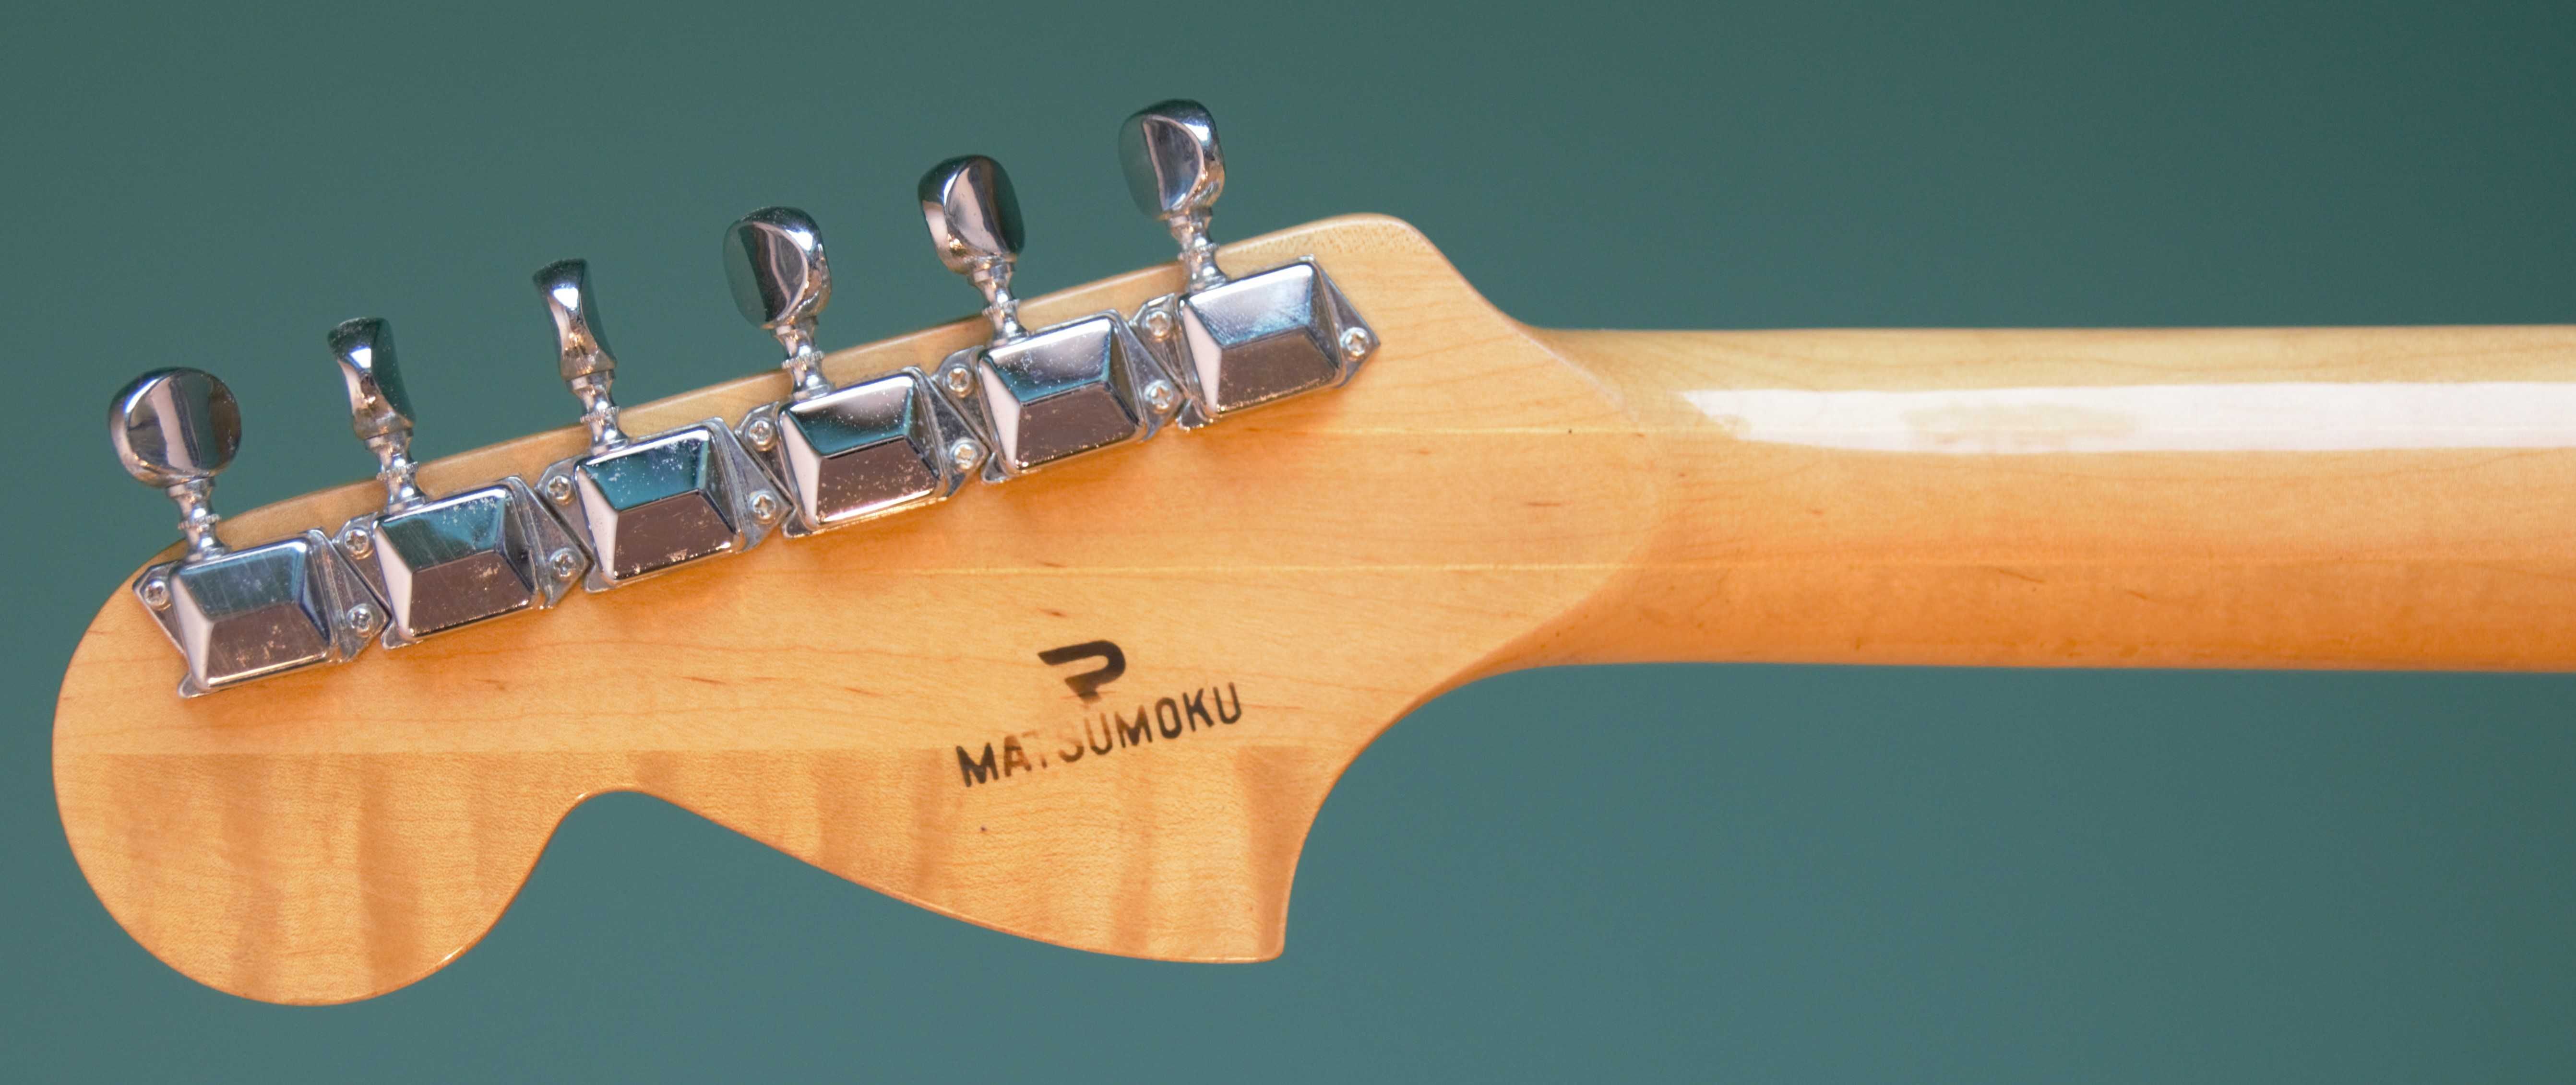 Stratocaster GRECO SE430 (nie Fender) 1973 made in japan